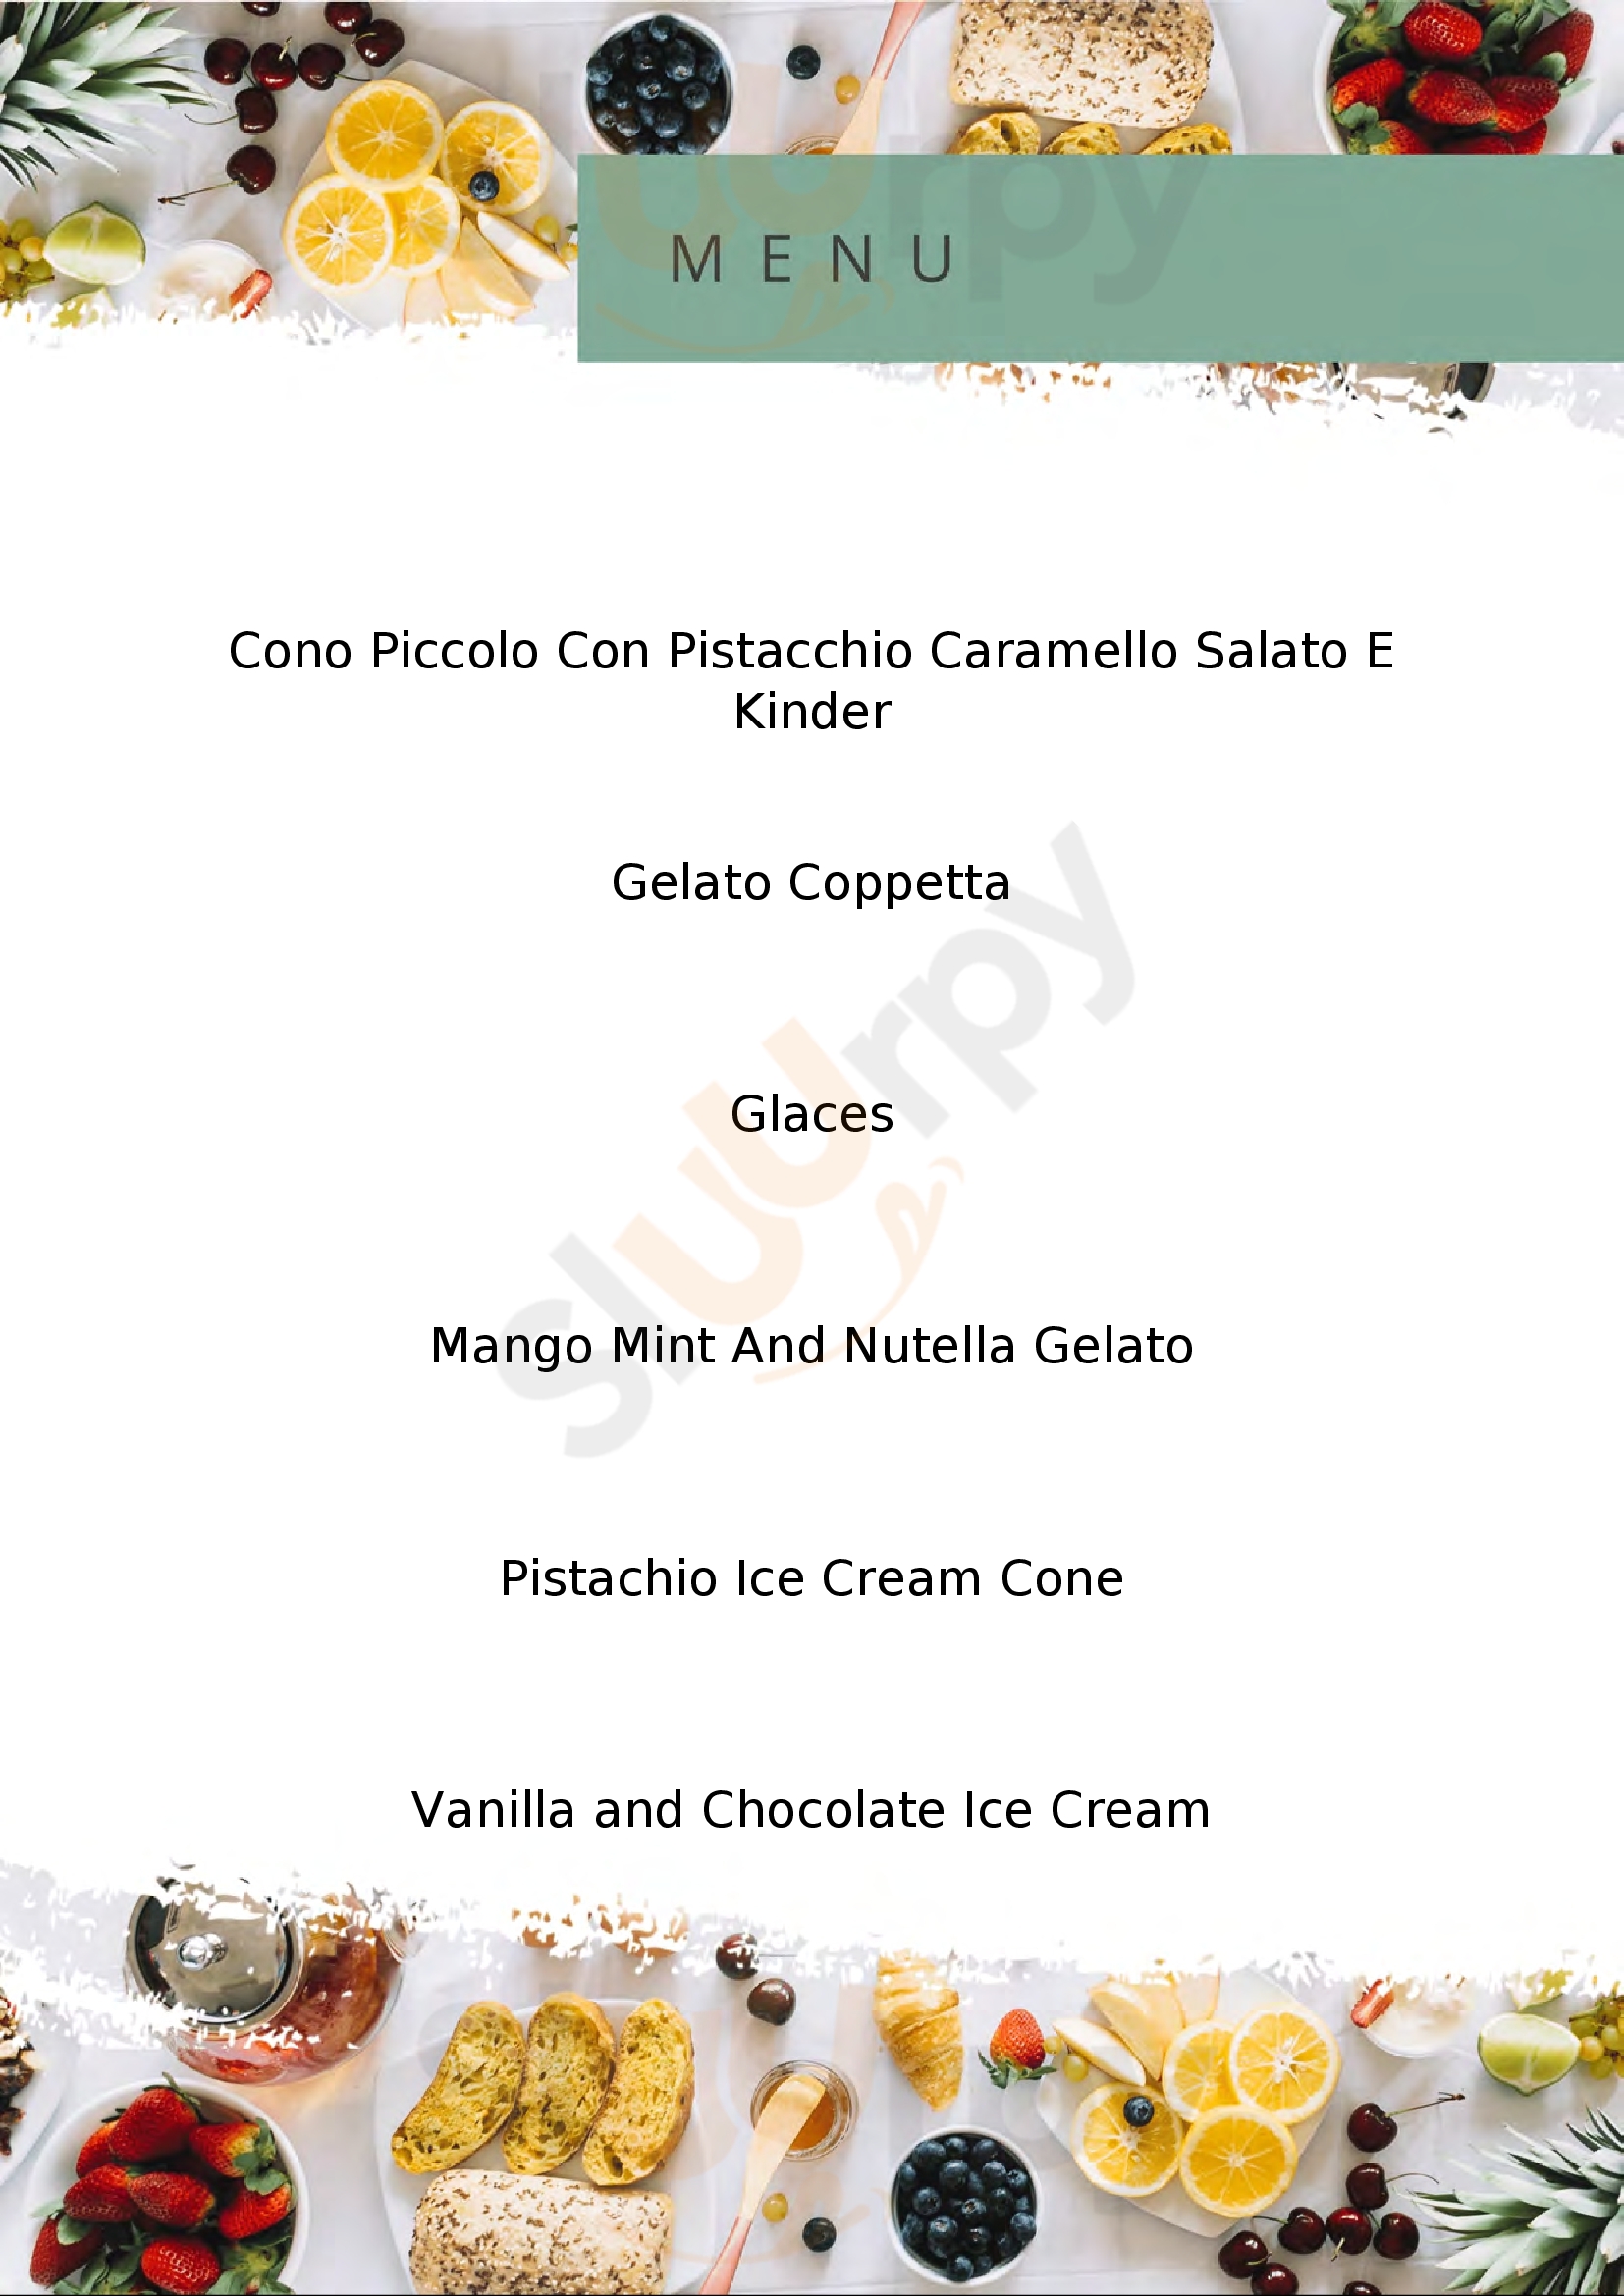 Crema e Cioccolato via candia Roma menù 1 pagina